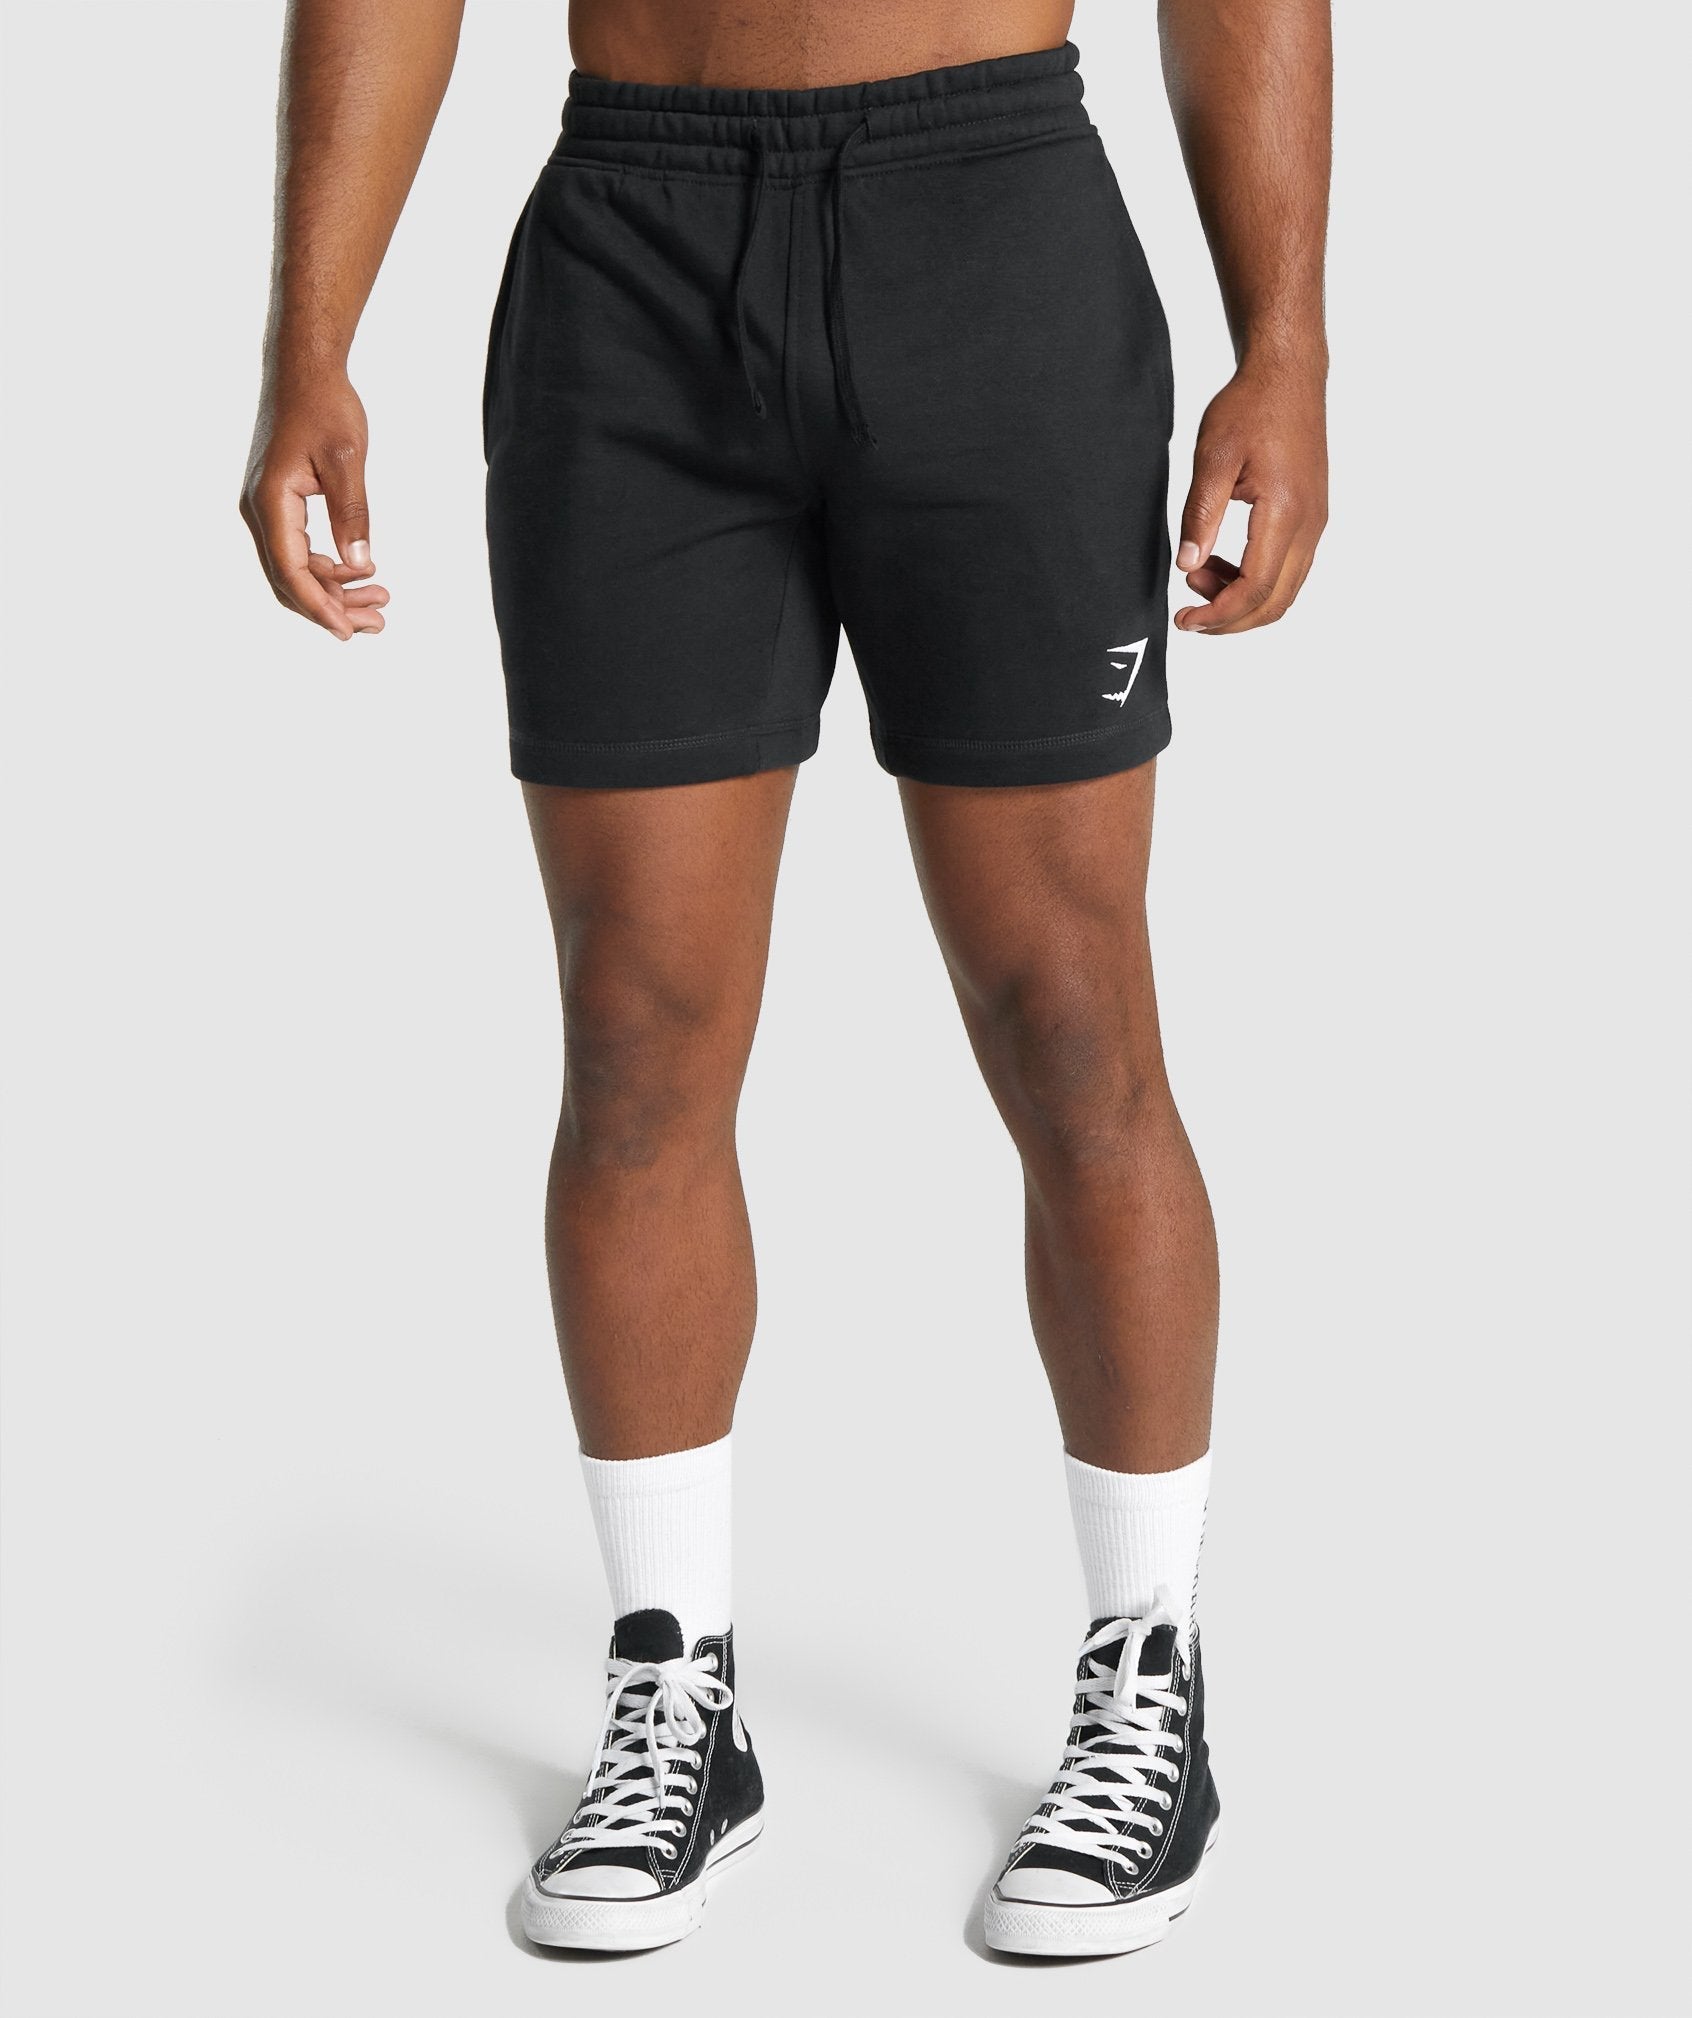 Gymshark Arrival Shorts - Black/Grey Camo